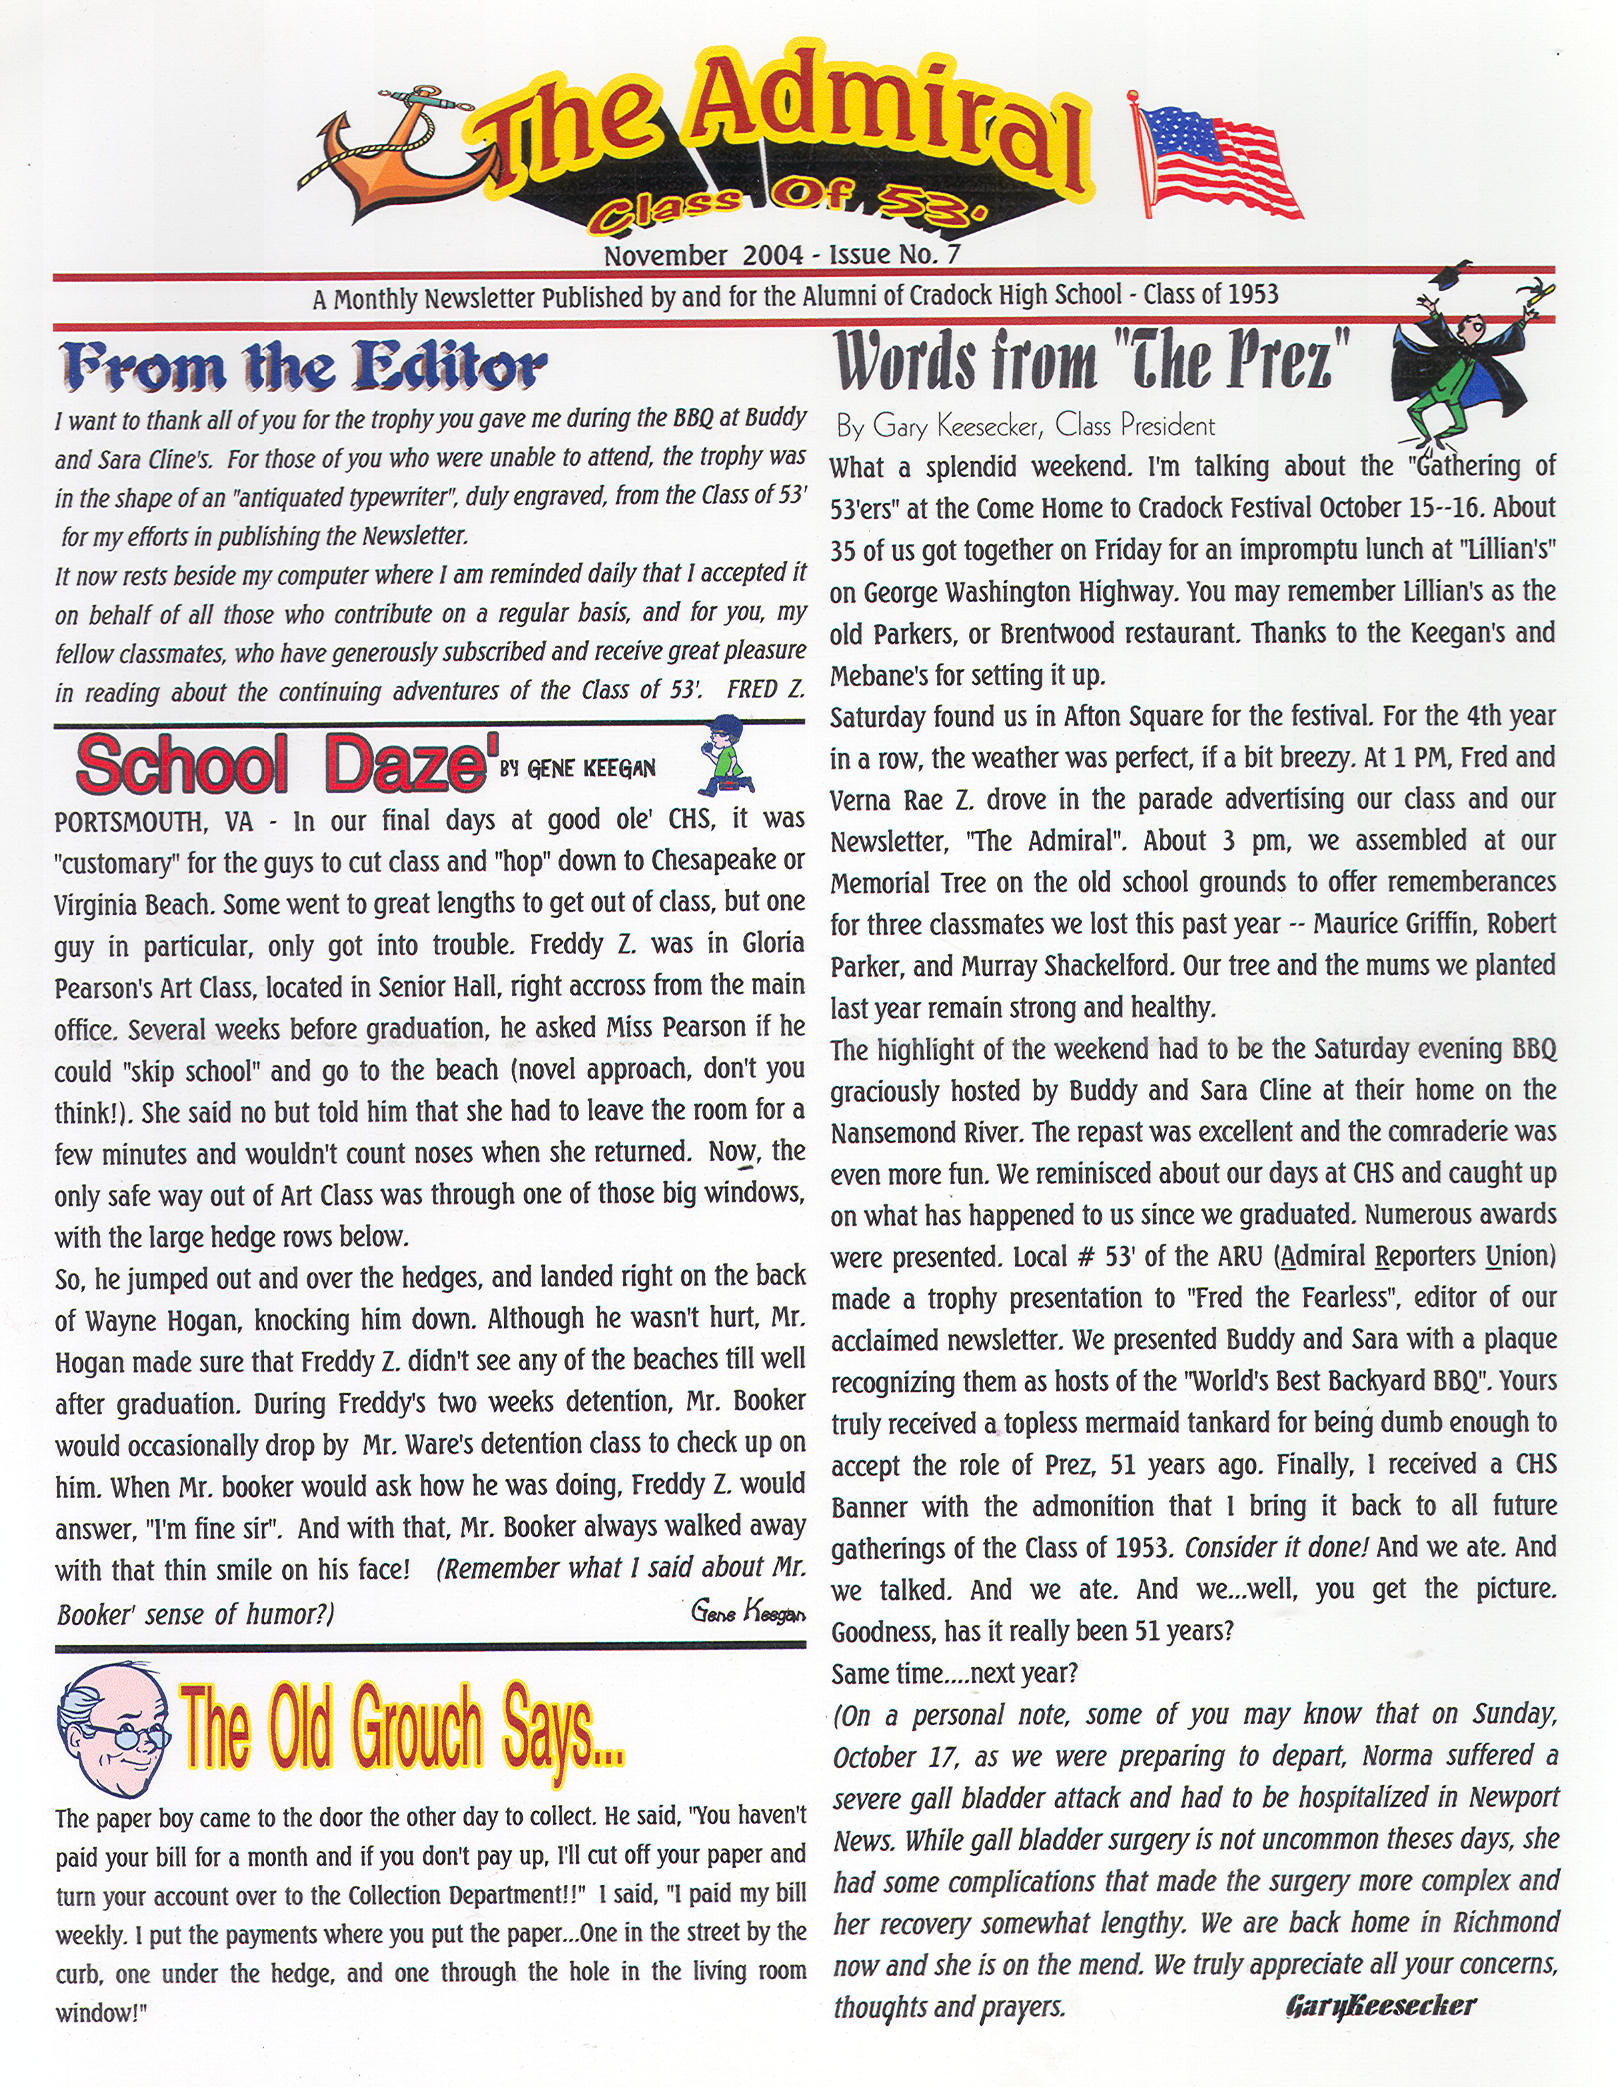 The Admiral - November 2004 - pg. 1